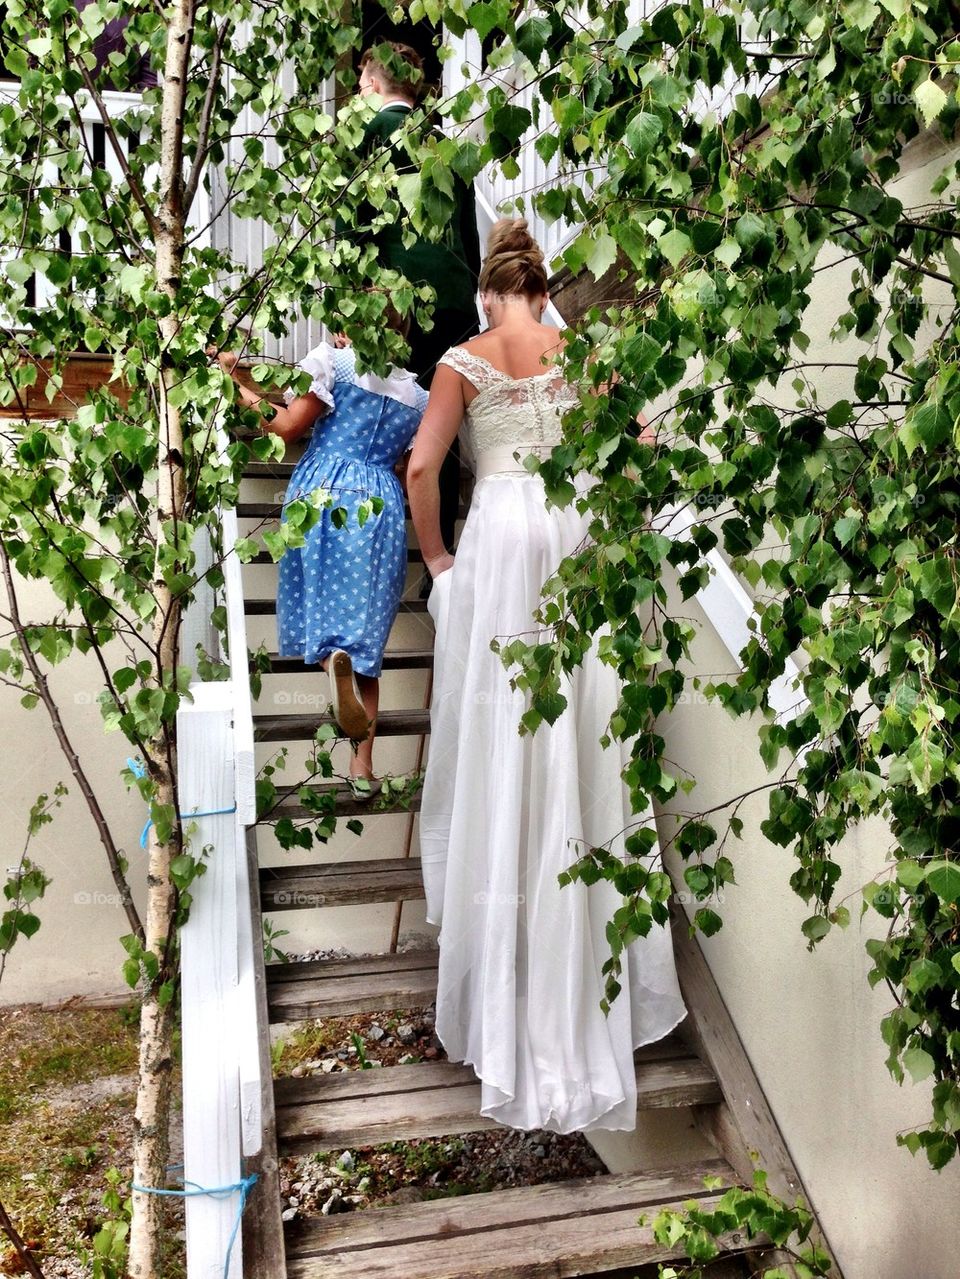 The bride's beautiful dress